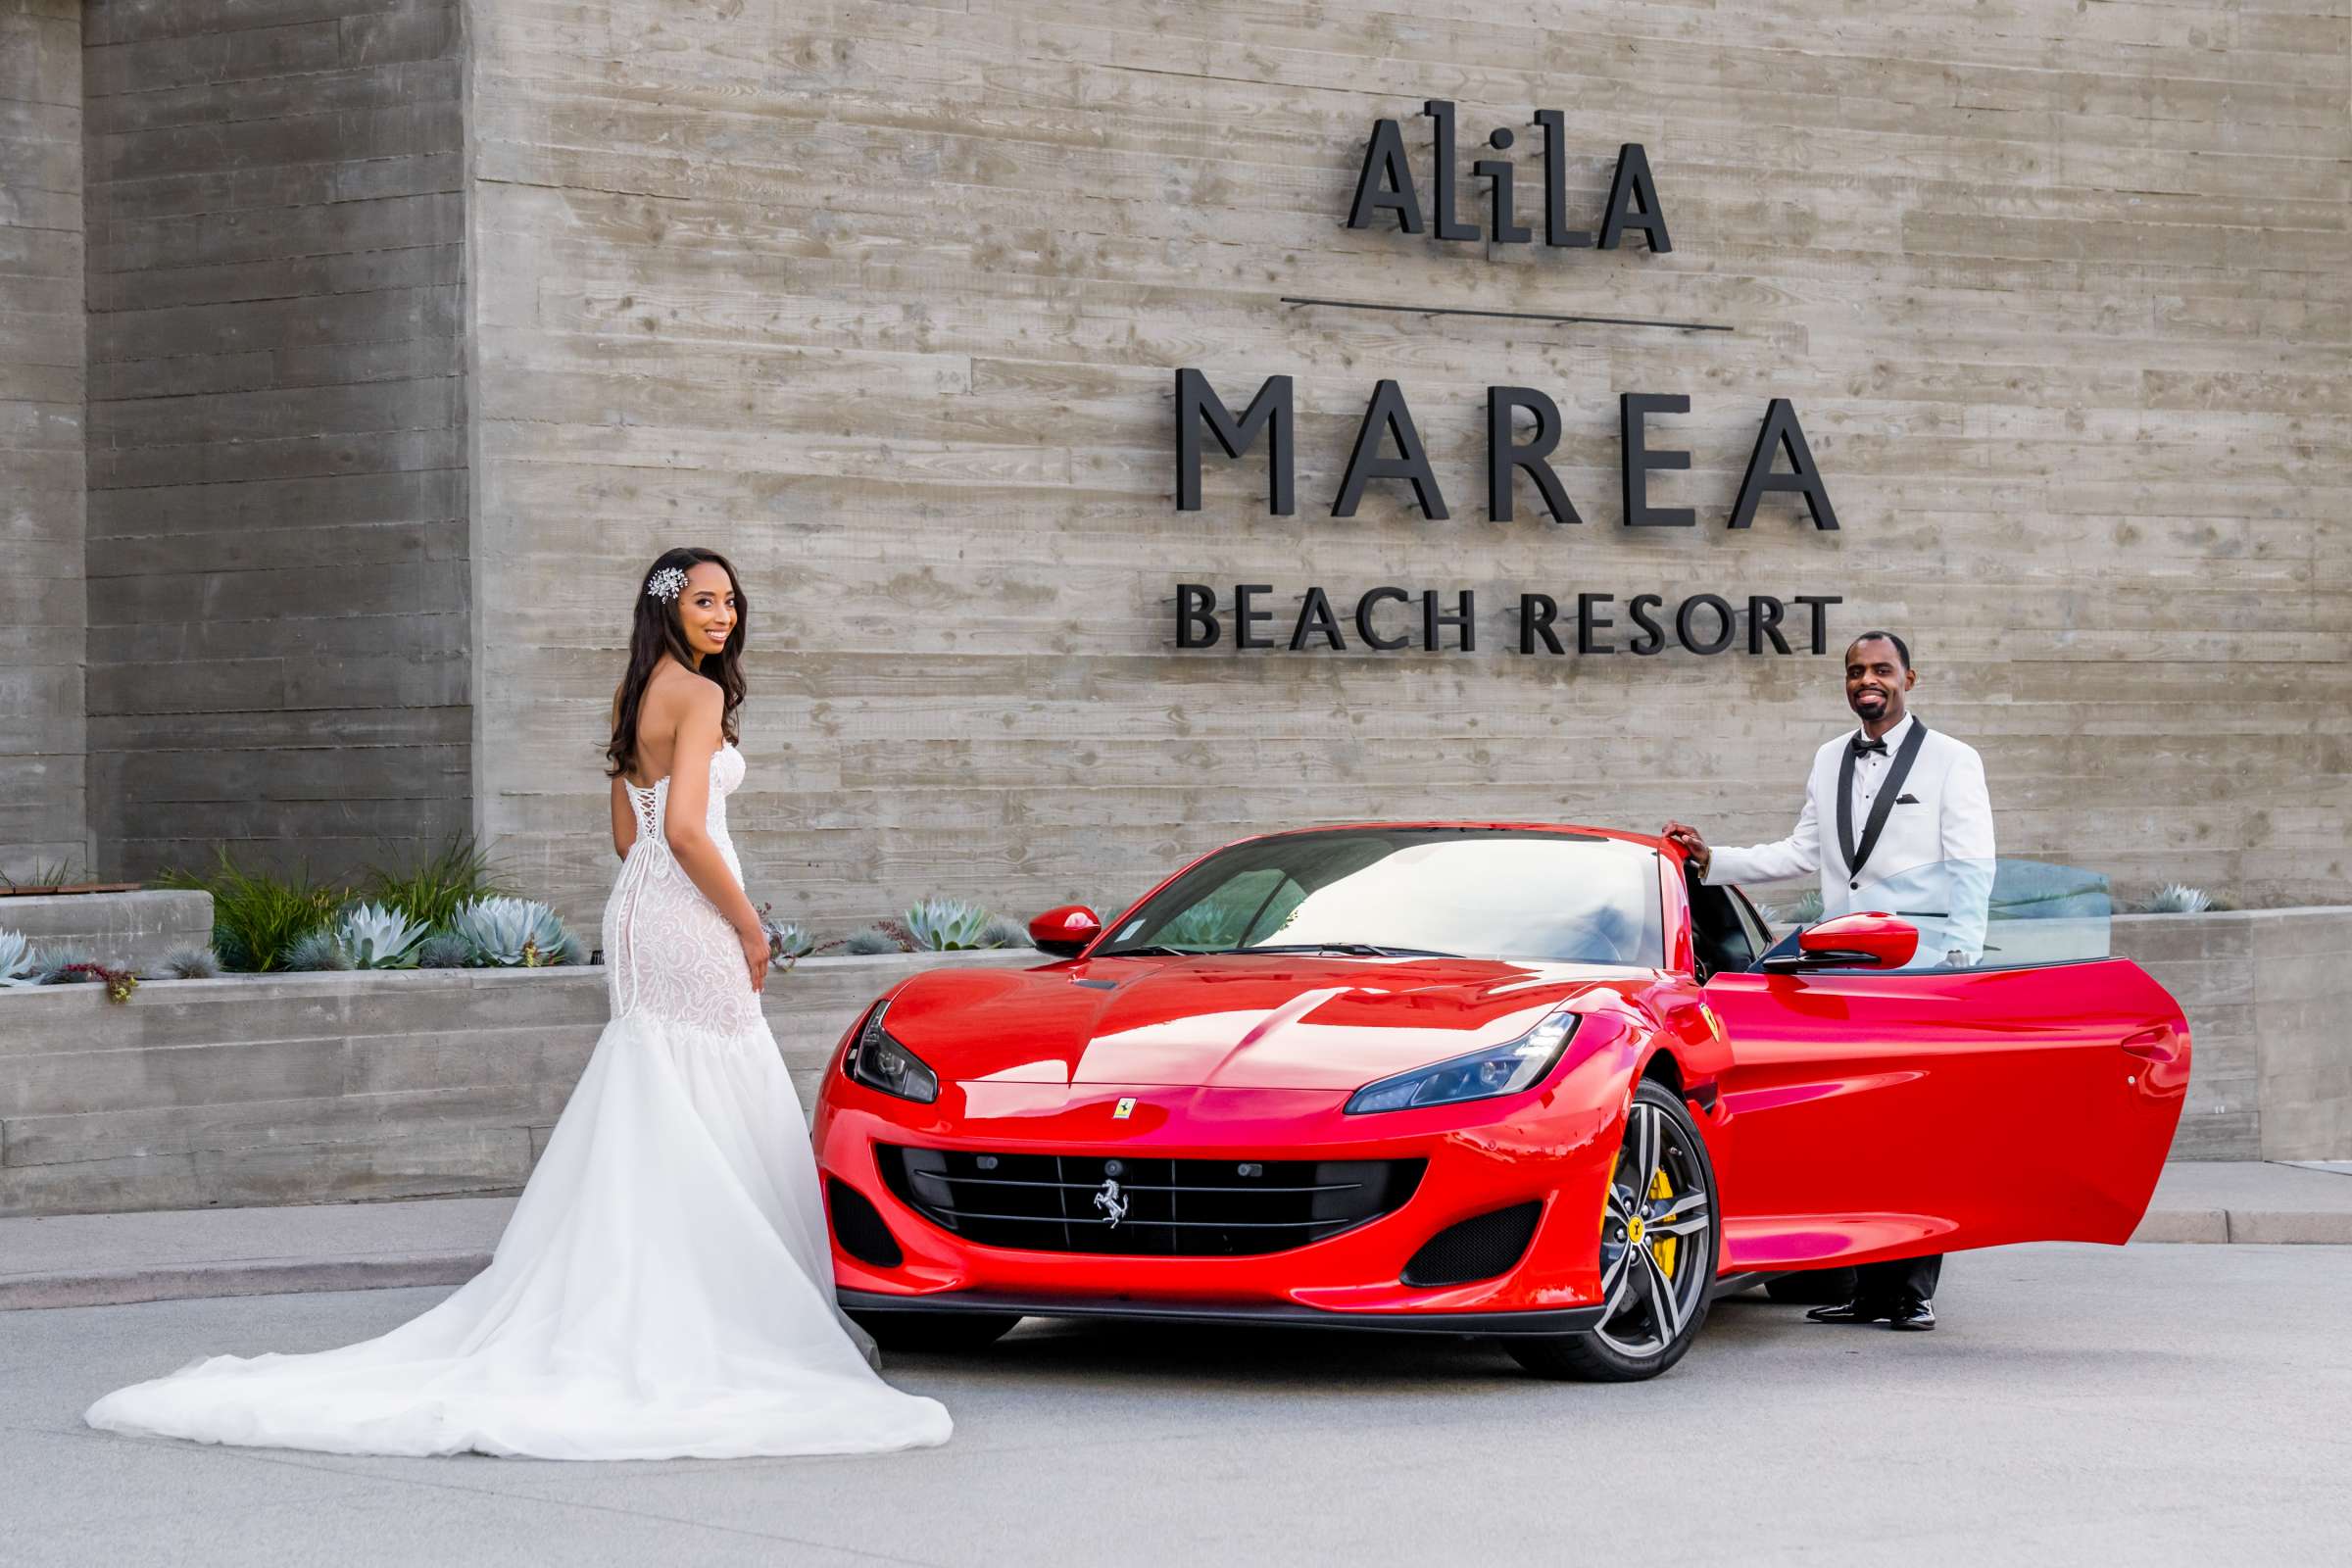 Alila Marea Beach Resort Encinitas Wedding coordinated by Lavish Weddings, T & M Wedding Photo #1 by True Photography